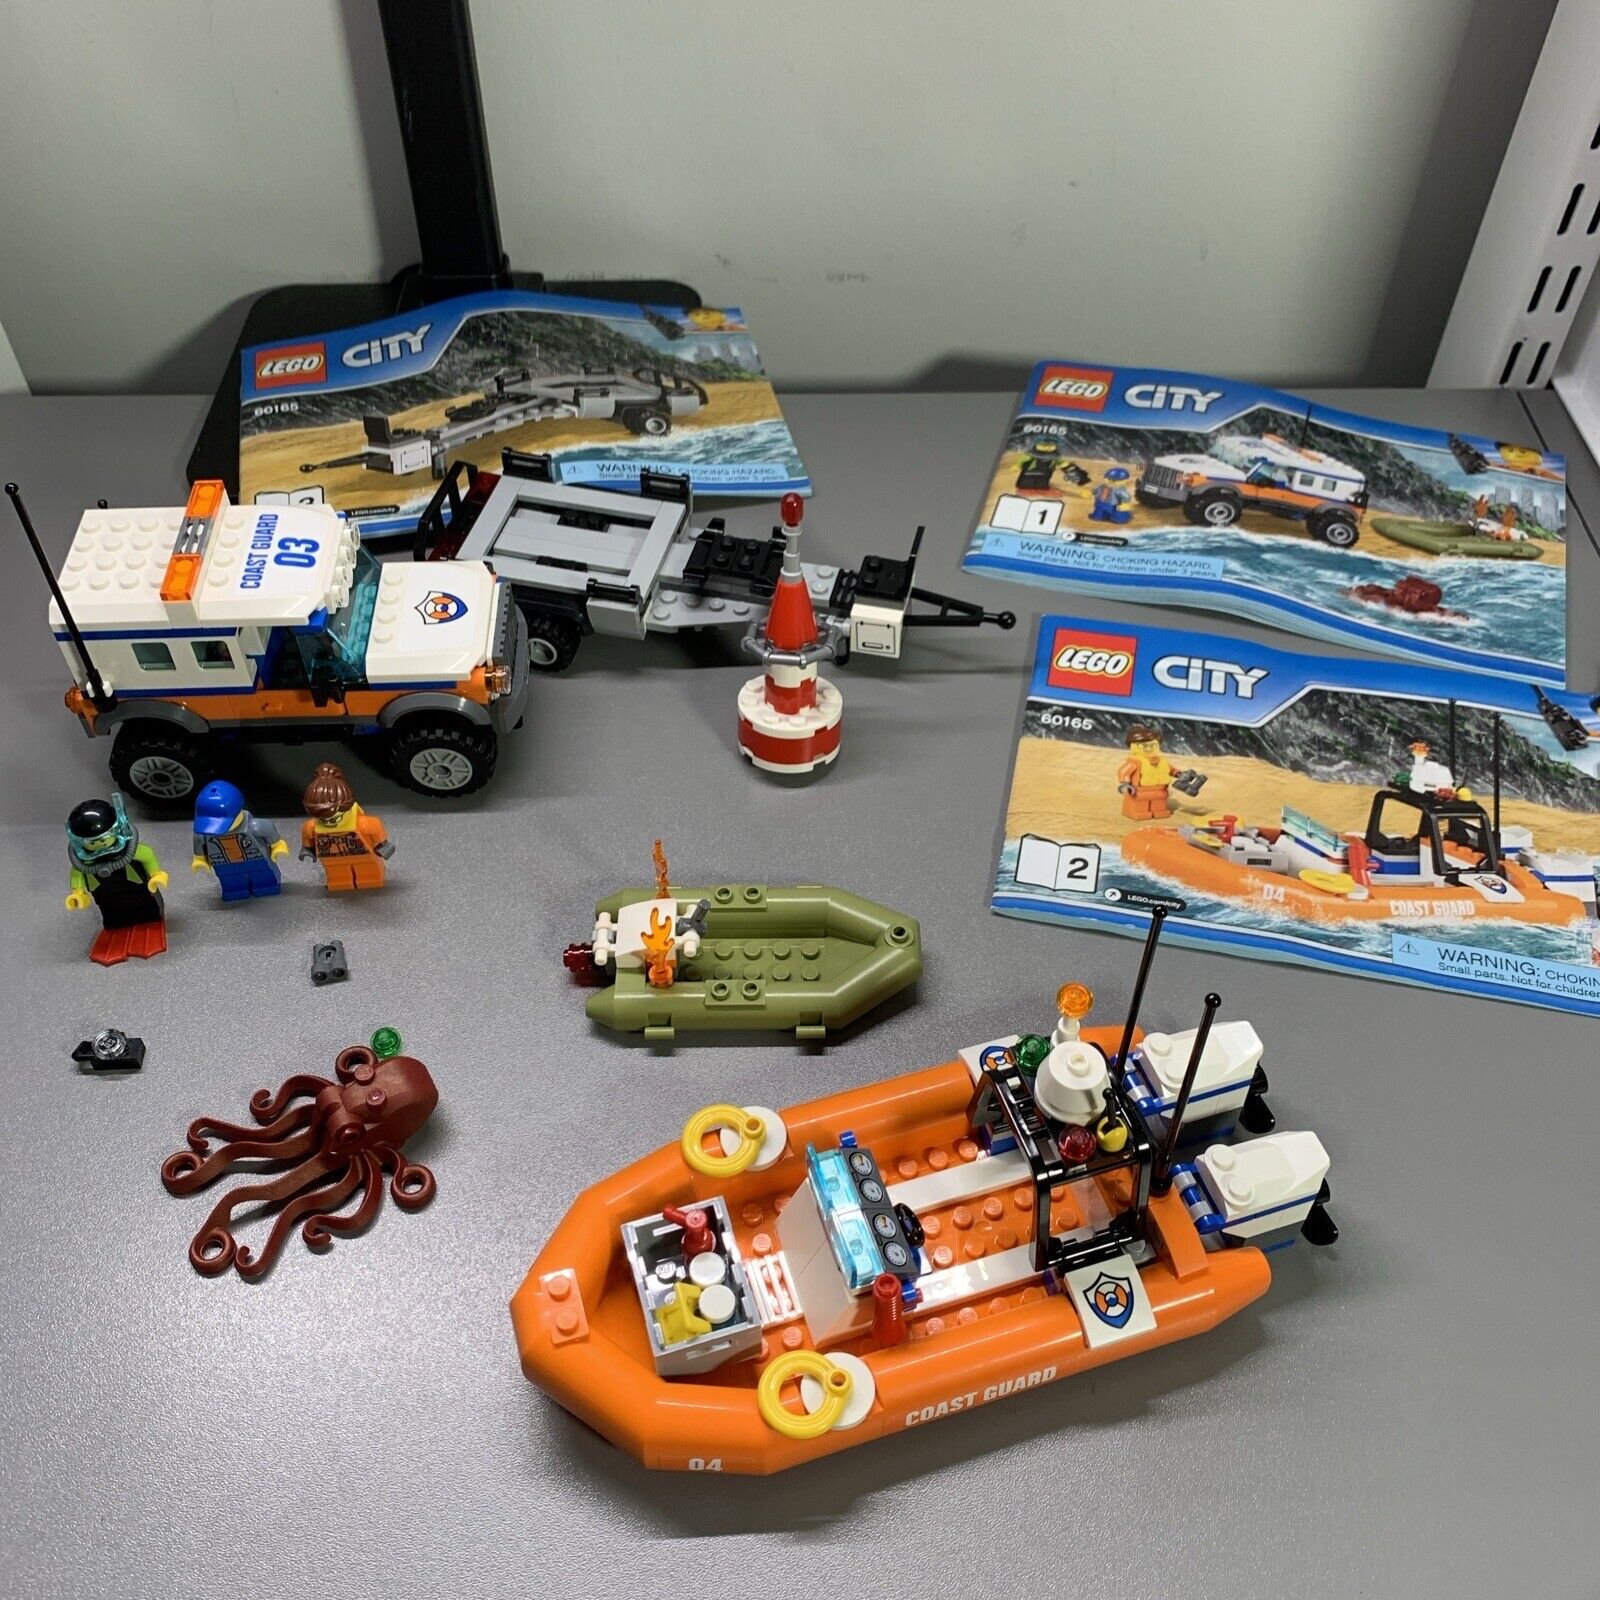 Lego 60165 City 4 x 4 Response Unit Complete Set Manuals Minifigures